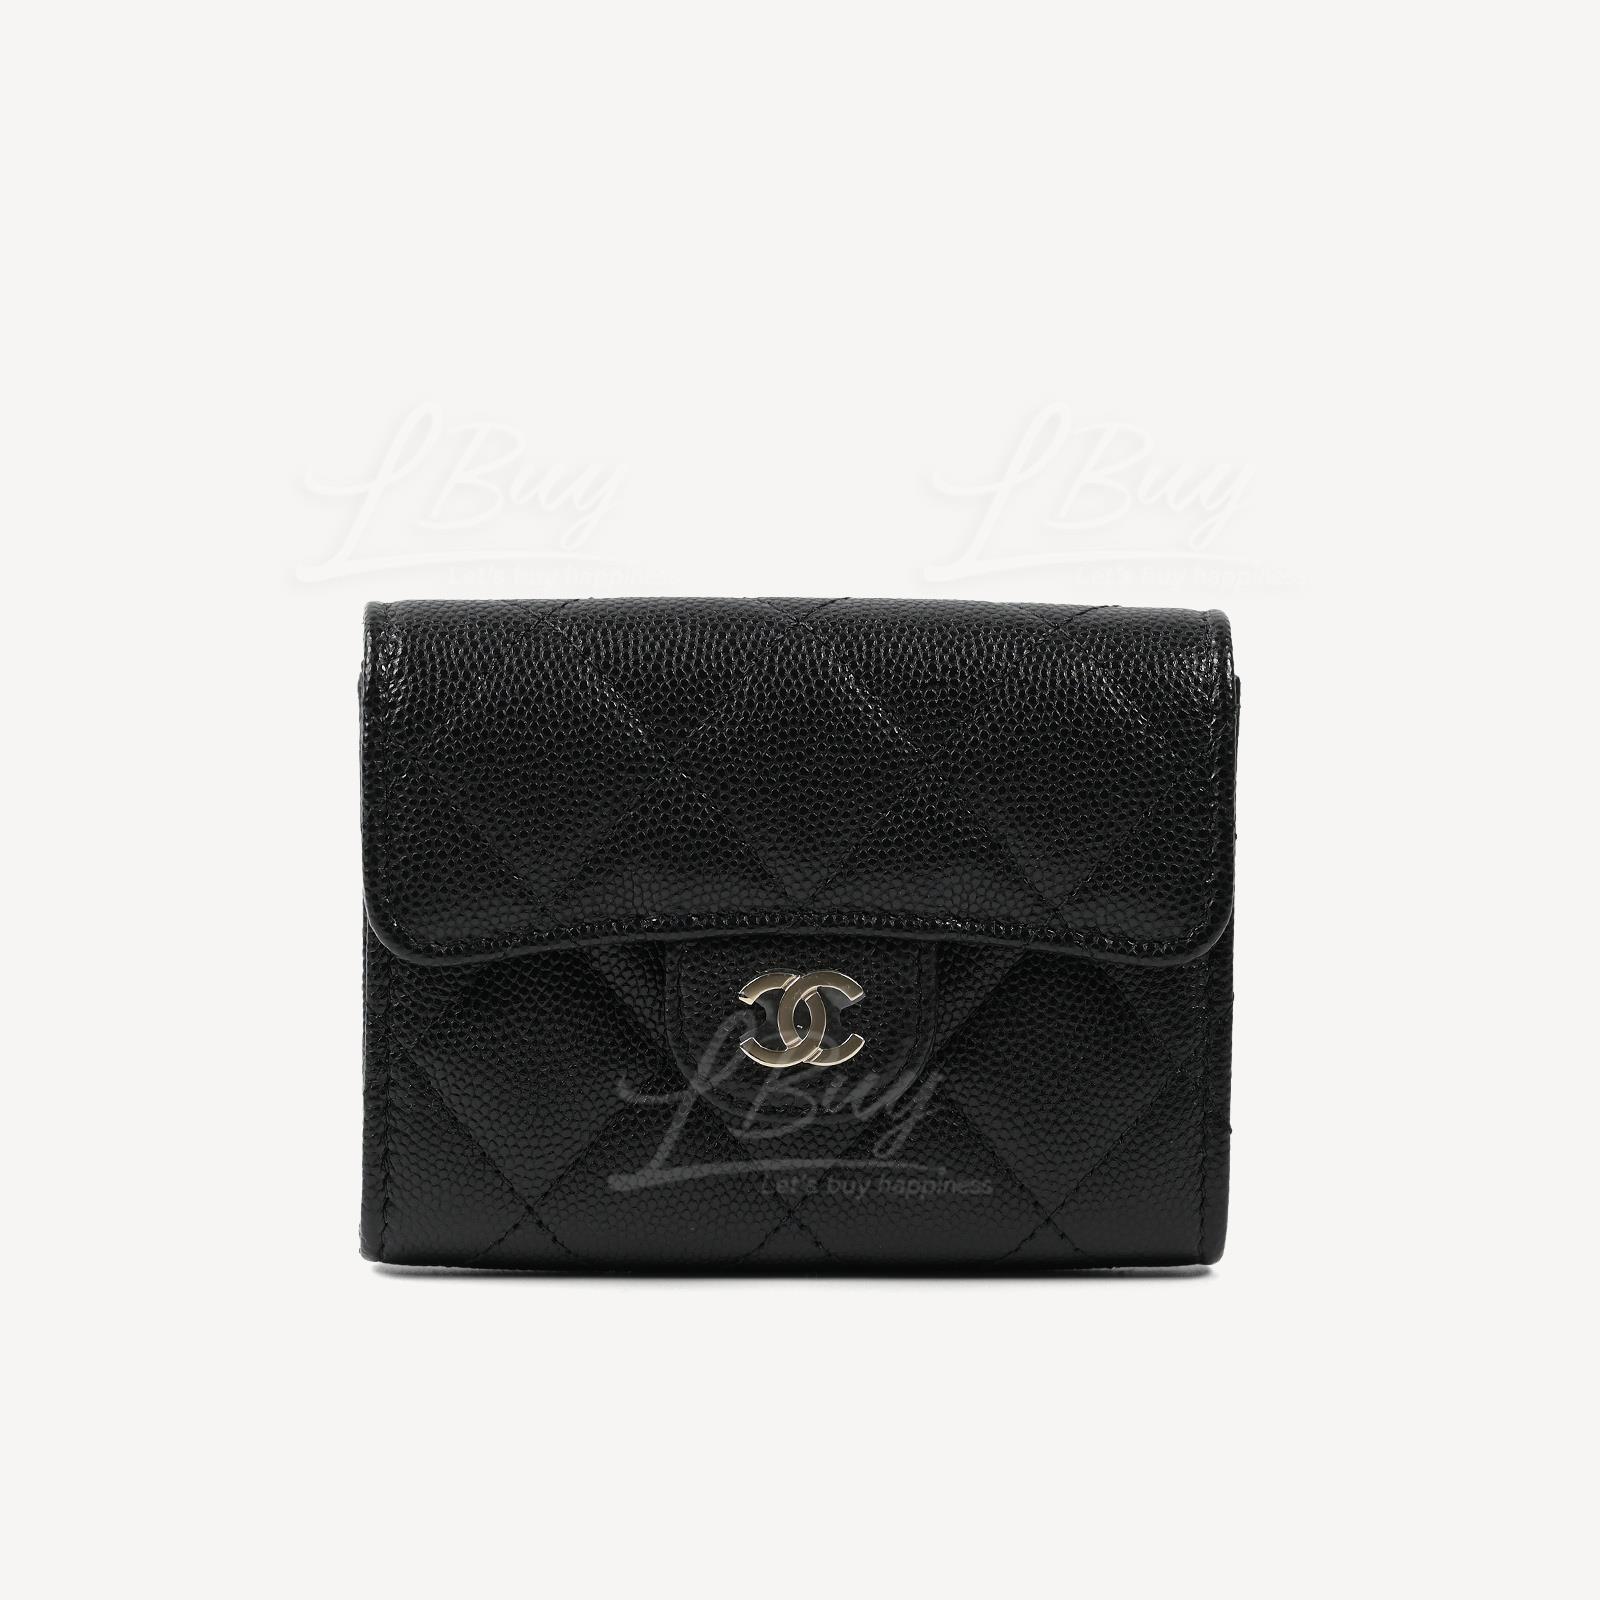 Chanel 經典款細號垂蓋銀包卡包 黑色配金色CC Logo AP0220